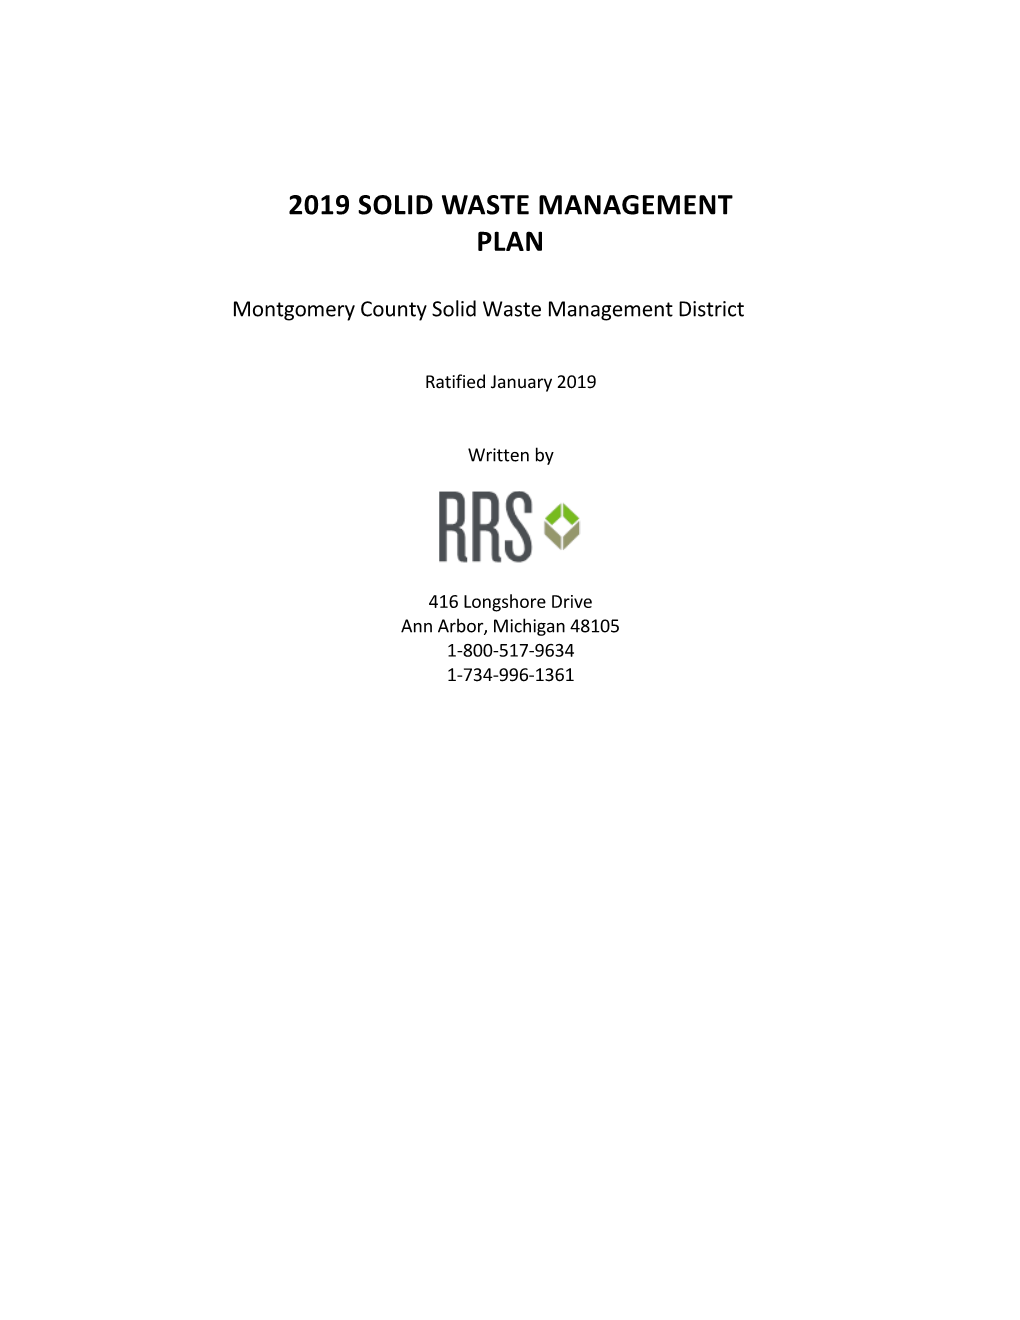 2019 Solid Waste Management Plan